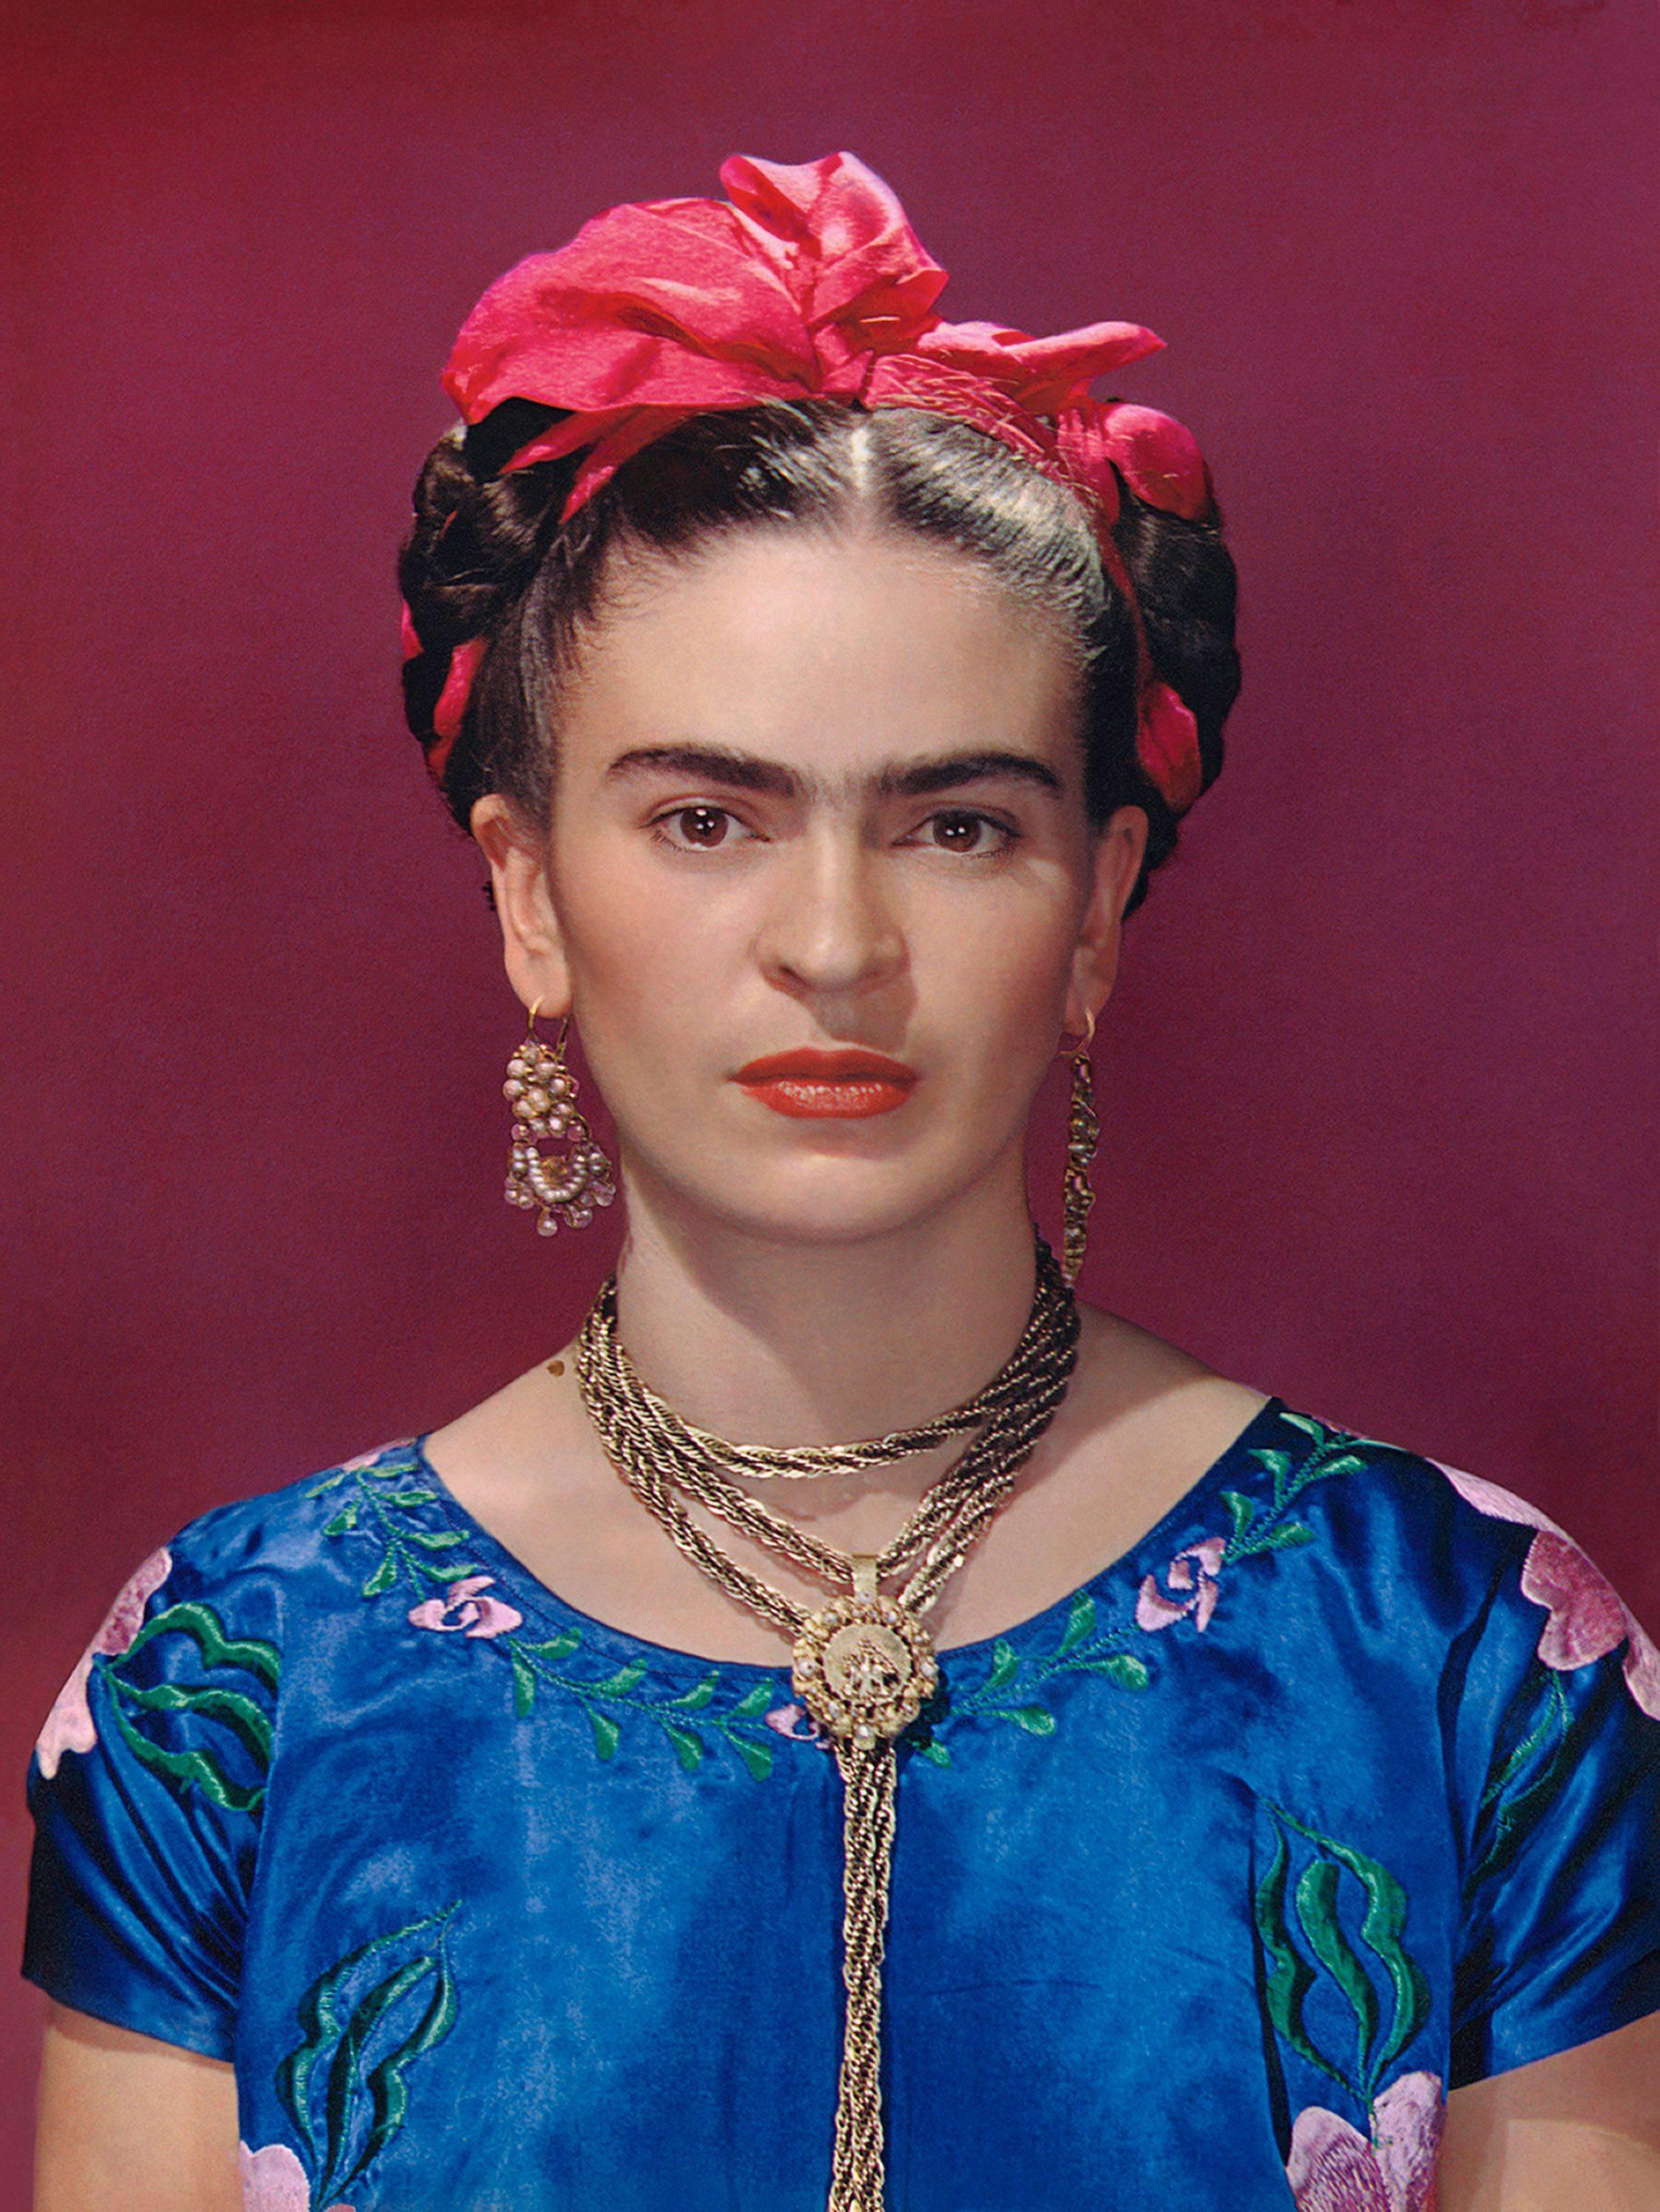 Nickolas Muray Portrait Photograph - Frida Kahlo in Blue Blouse (1st edition)